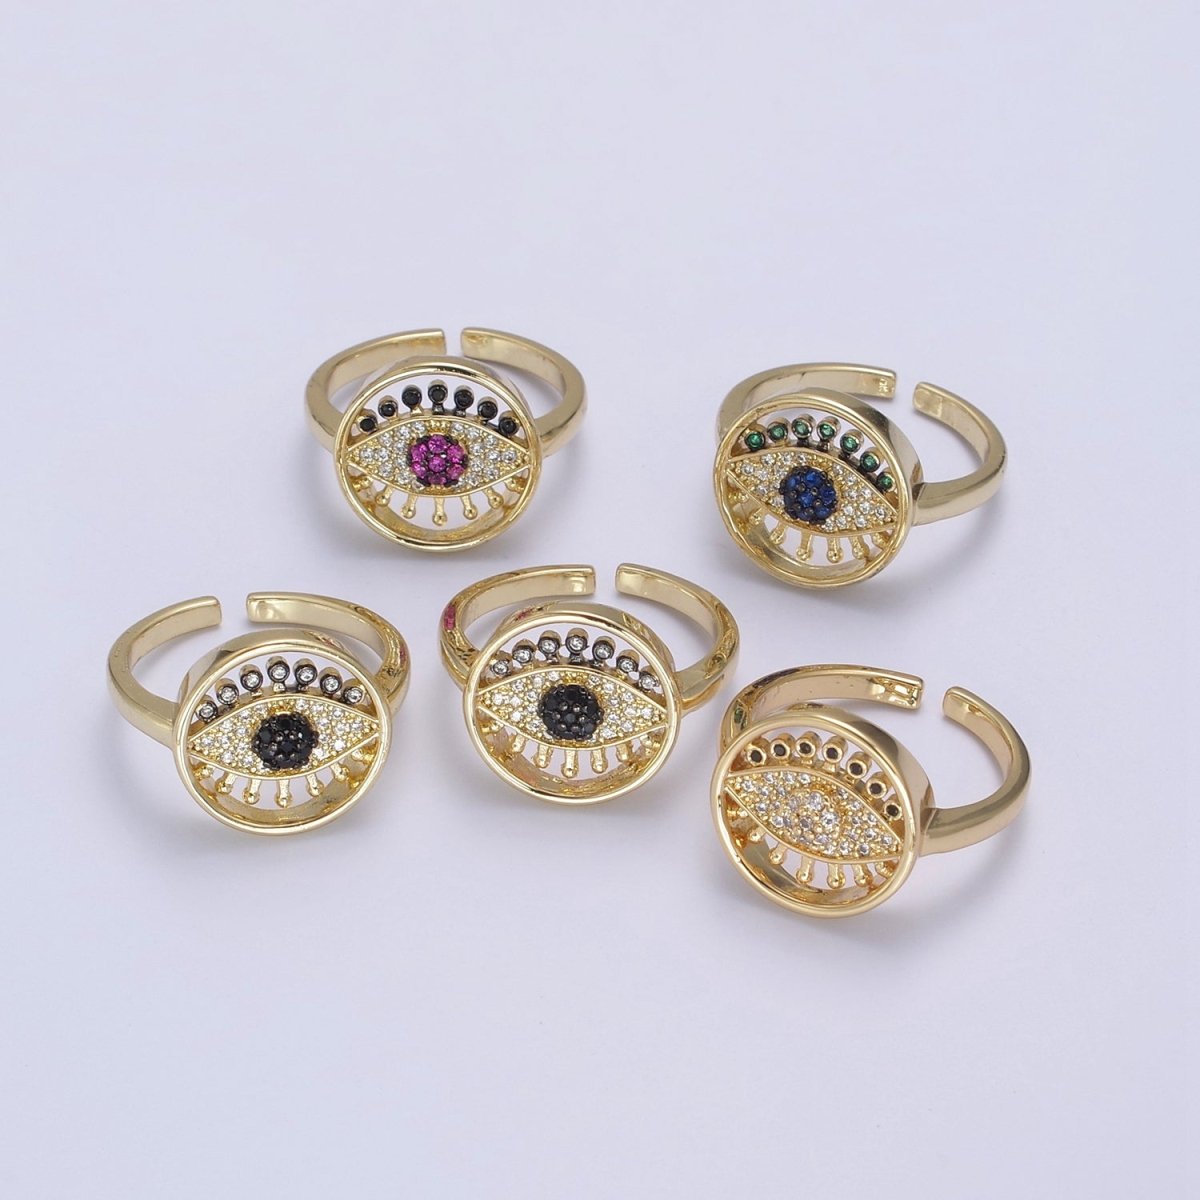 Evil Eye Ring Adjustable Ring, Gold Minimalist Ring, Diamond Evil Eye Ring, Amulet Ring, Protection Ring, Thin Delicate Ring, Gift Idea U-525 ~ U-529 - DLUXCA